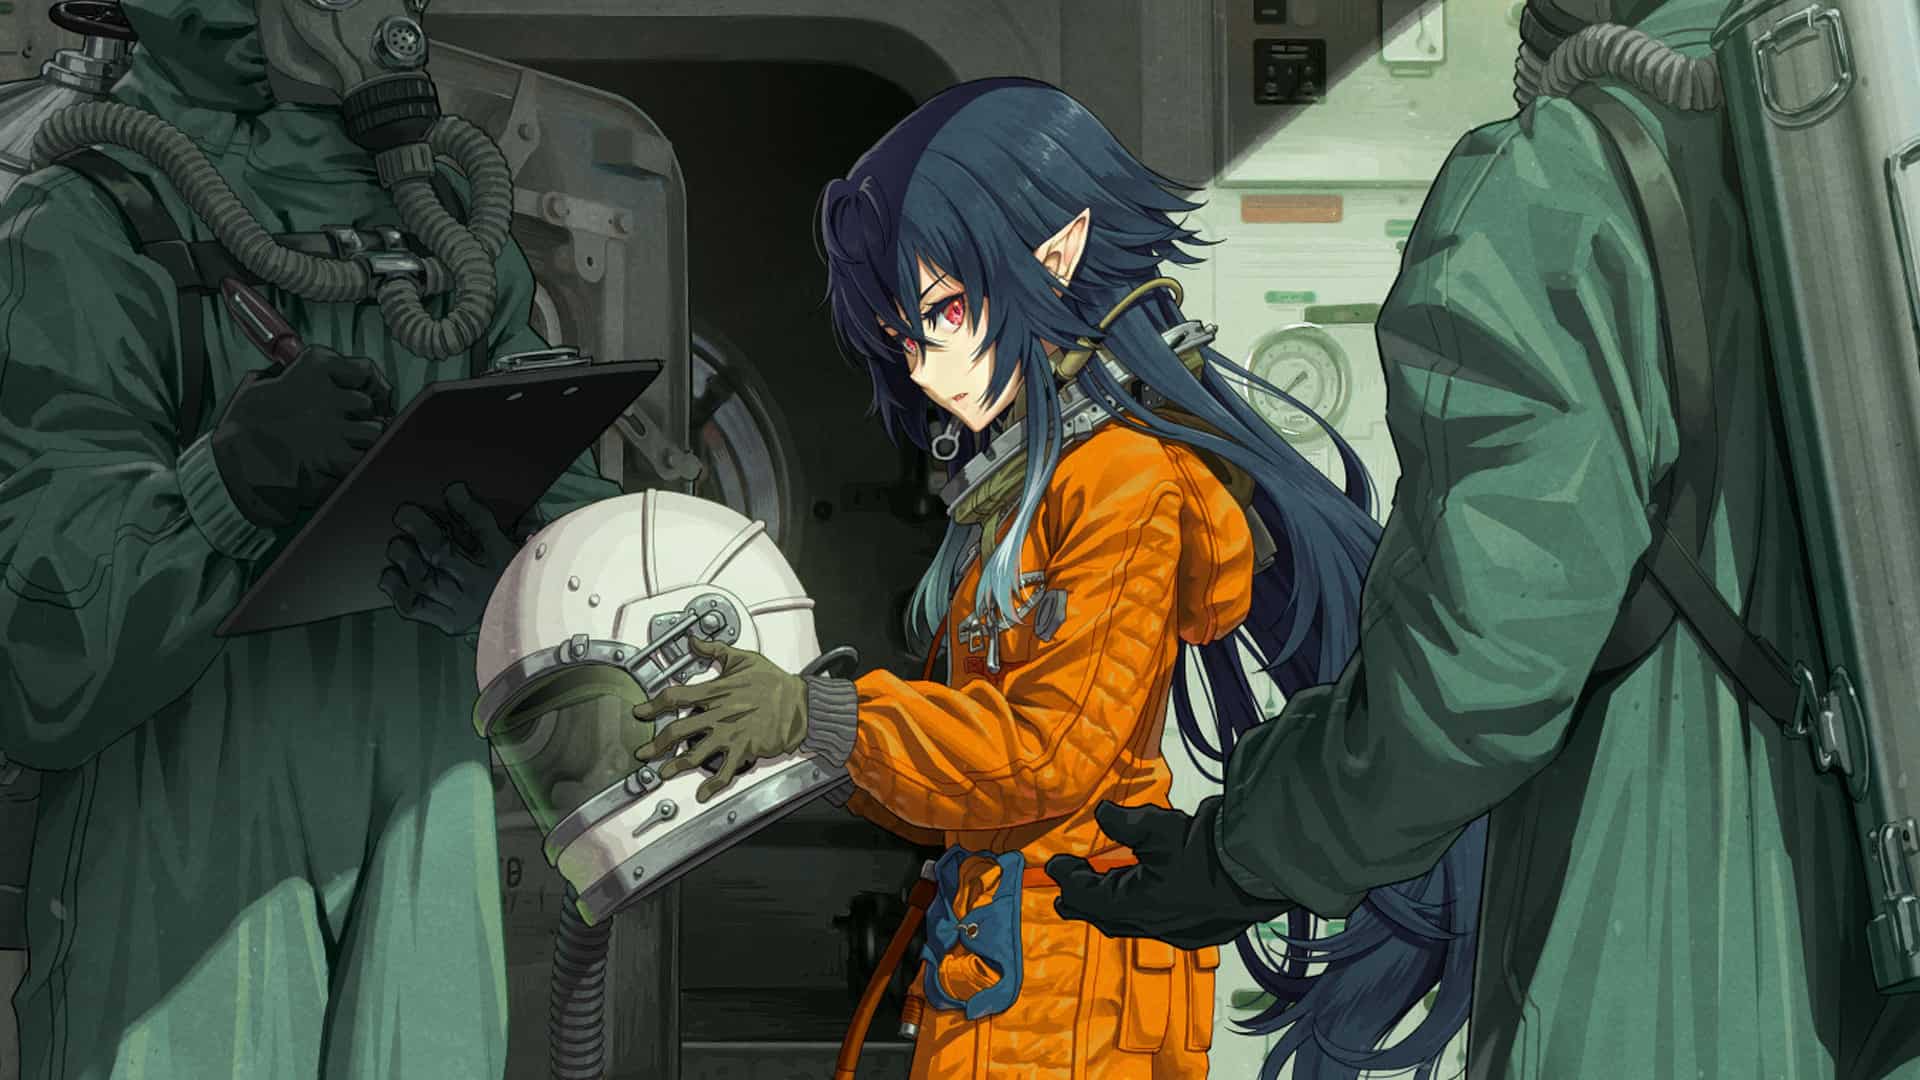 Irina holding a helmet